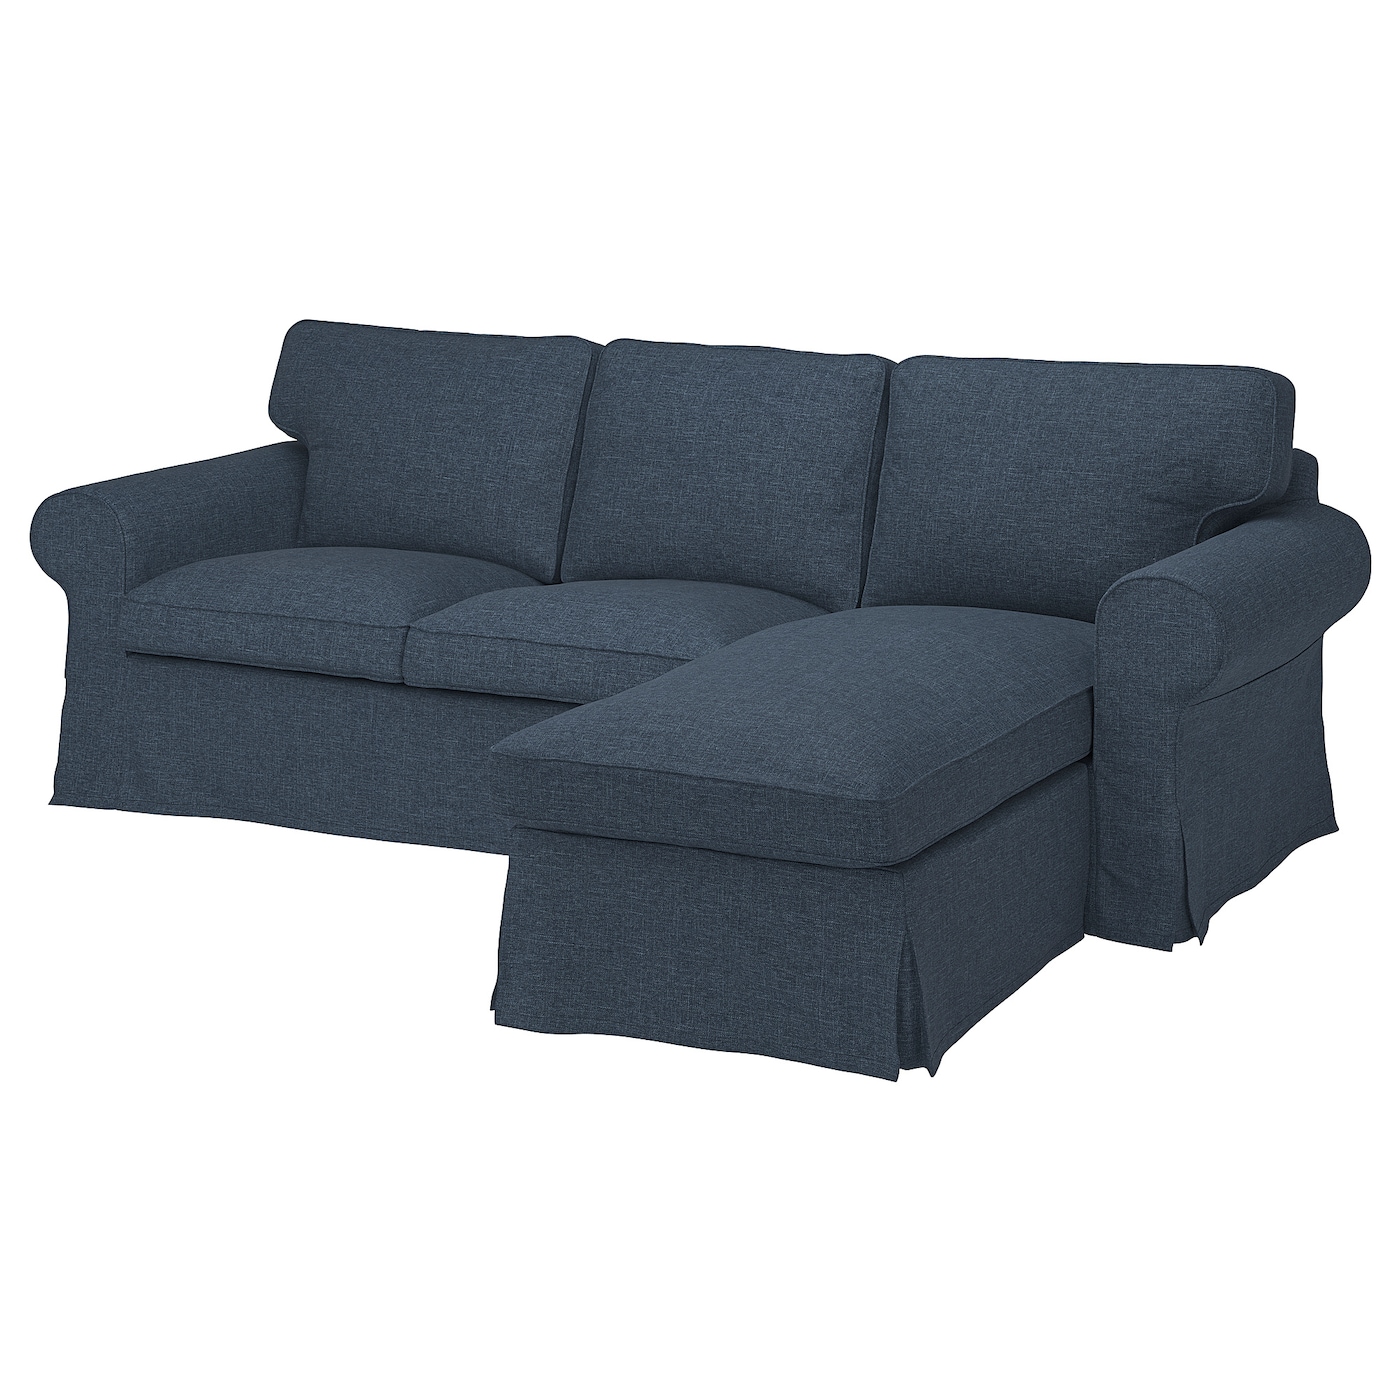 ЭКТОРП 3-местный диван+диван, Киланда темно-синий EKTORP IKEA